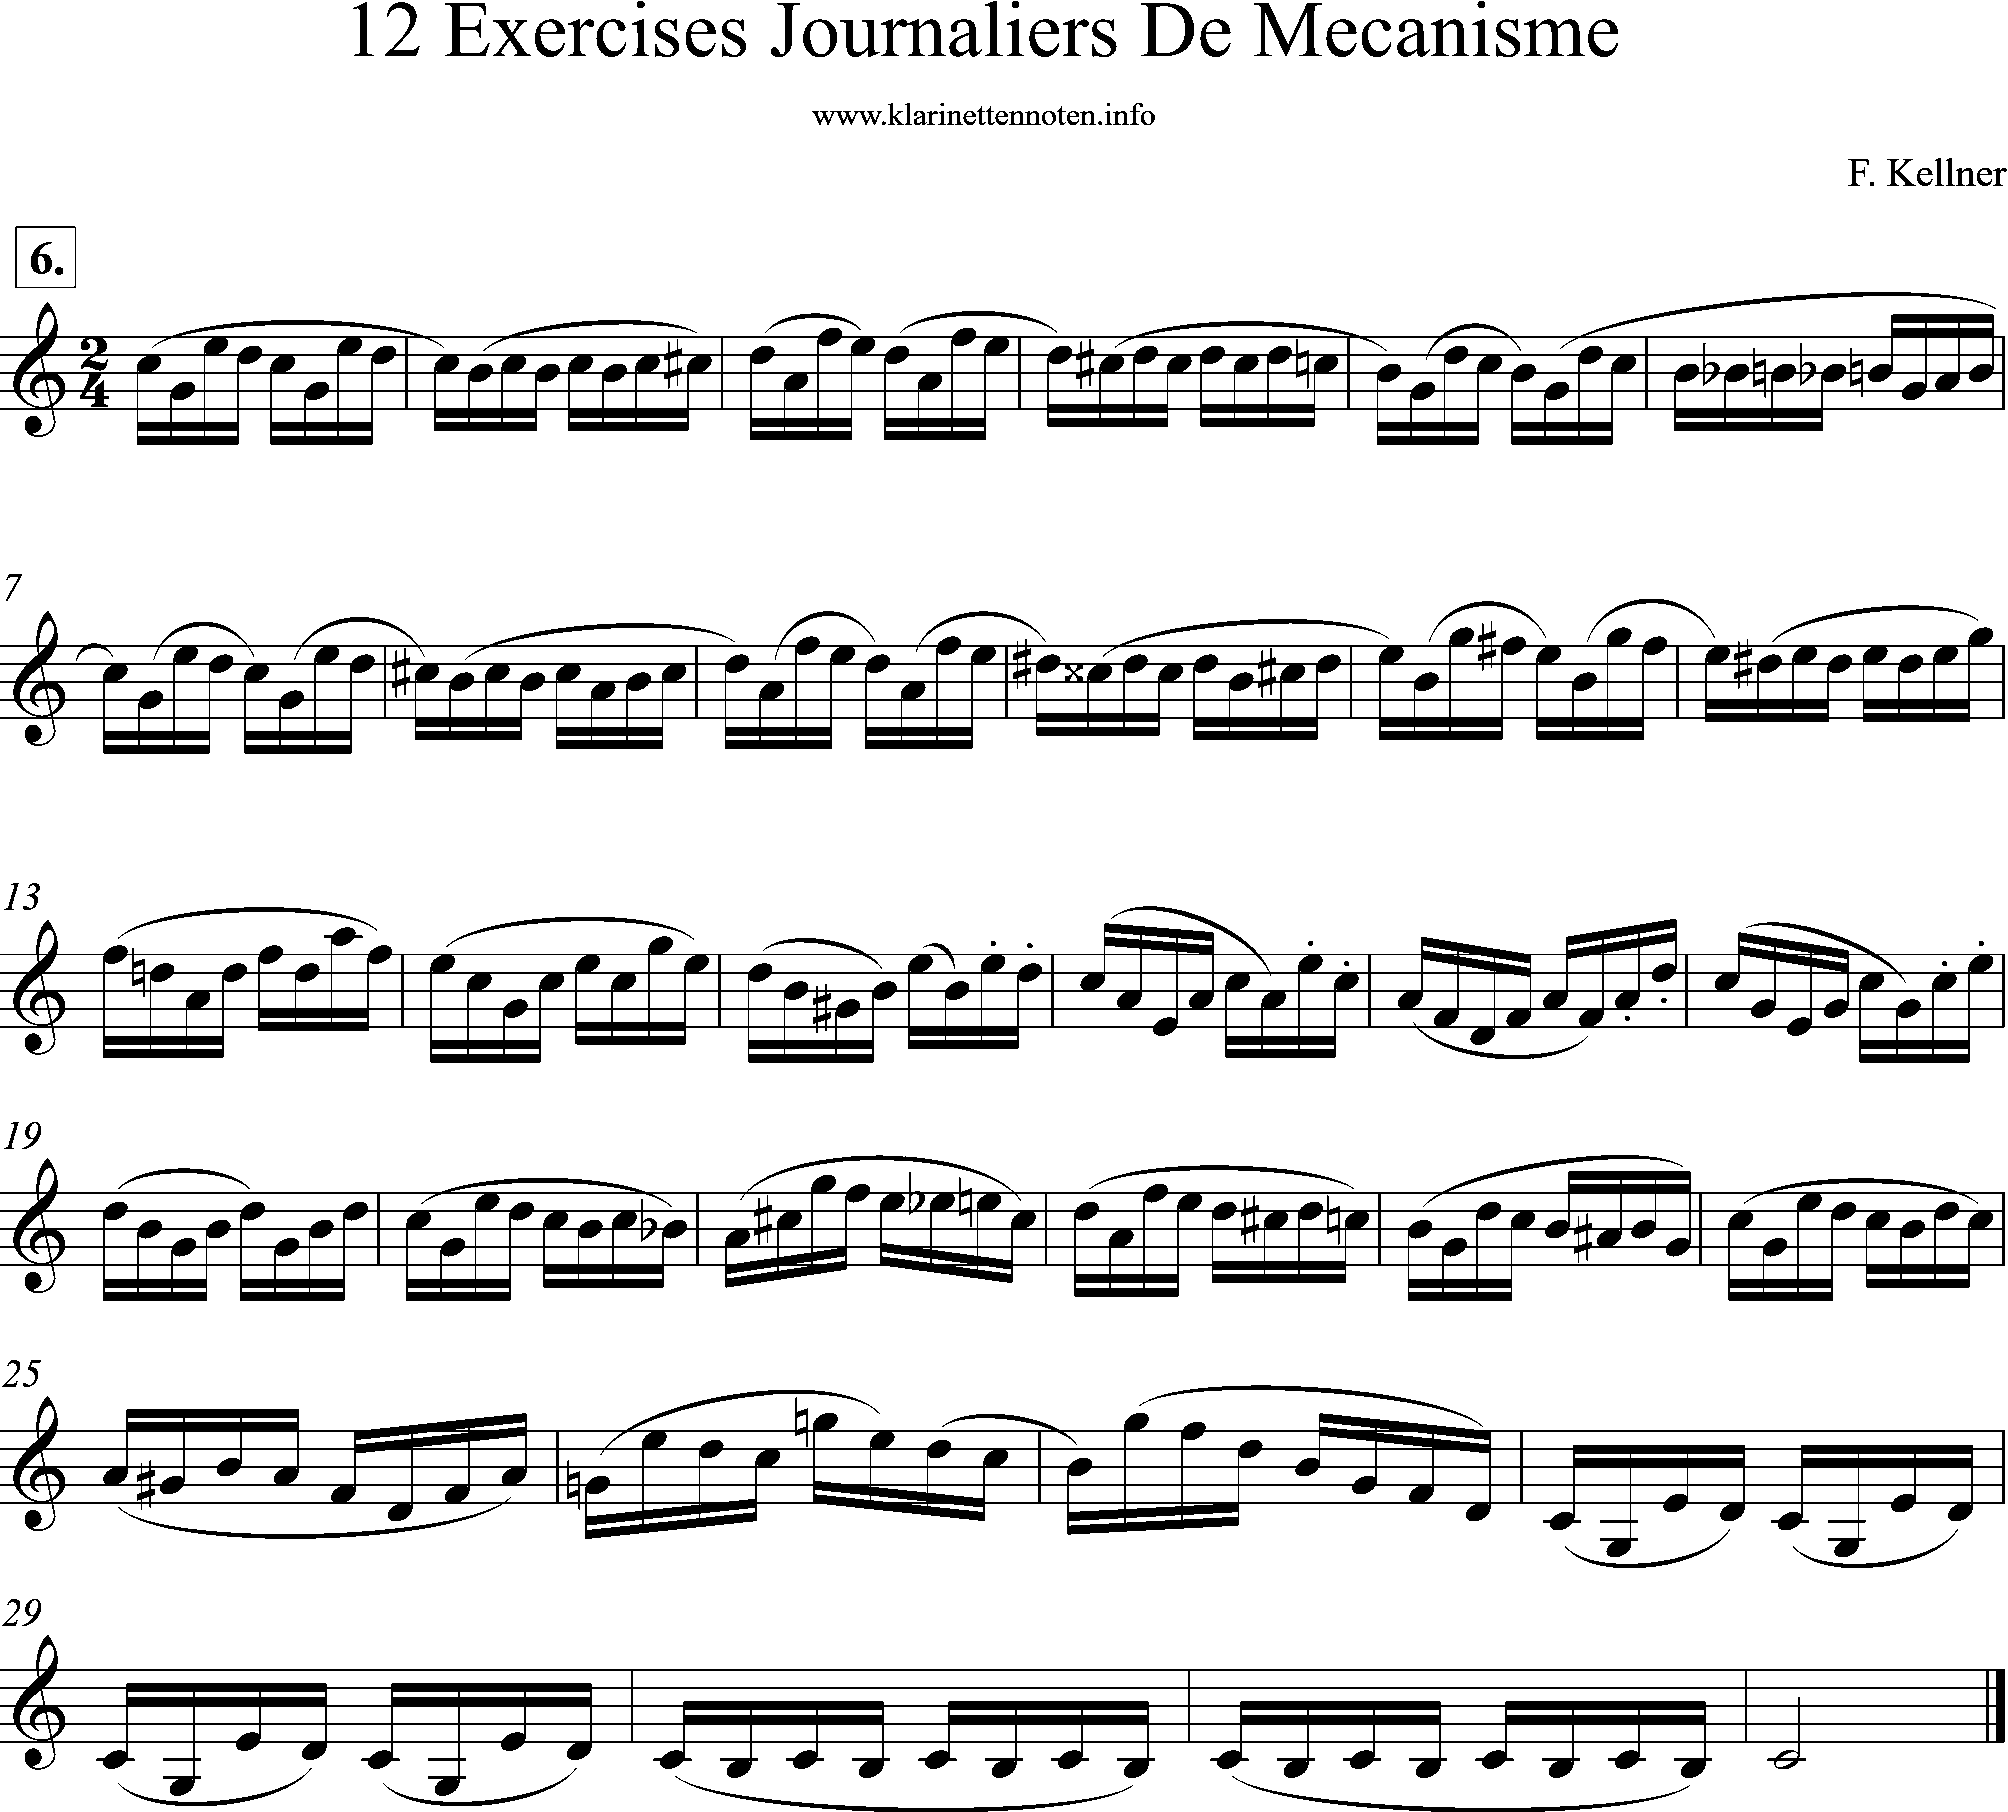 kellner, 12 exercises- No. 2